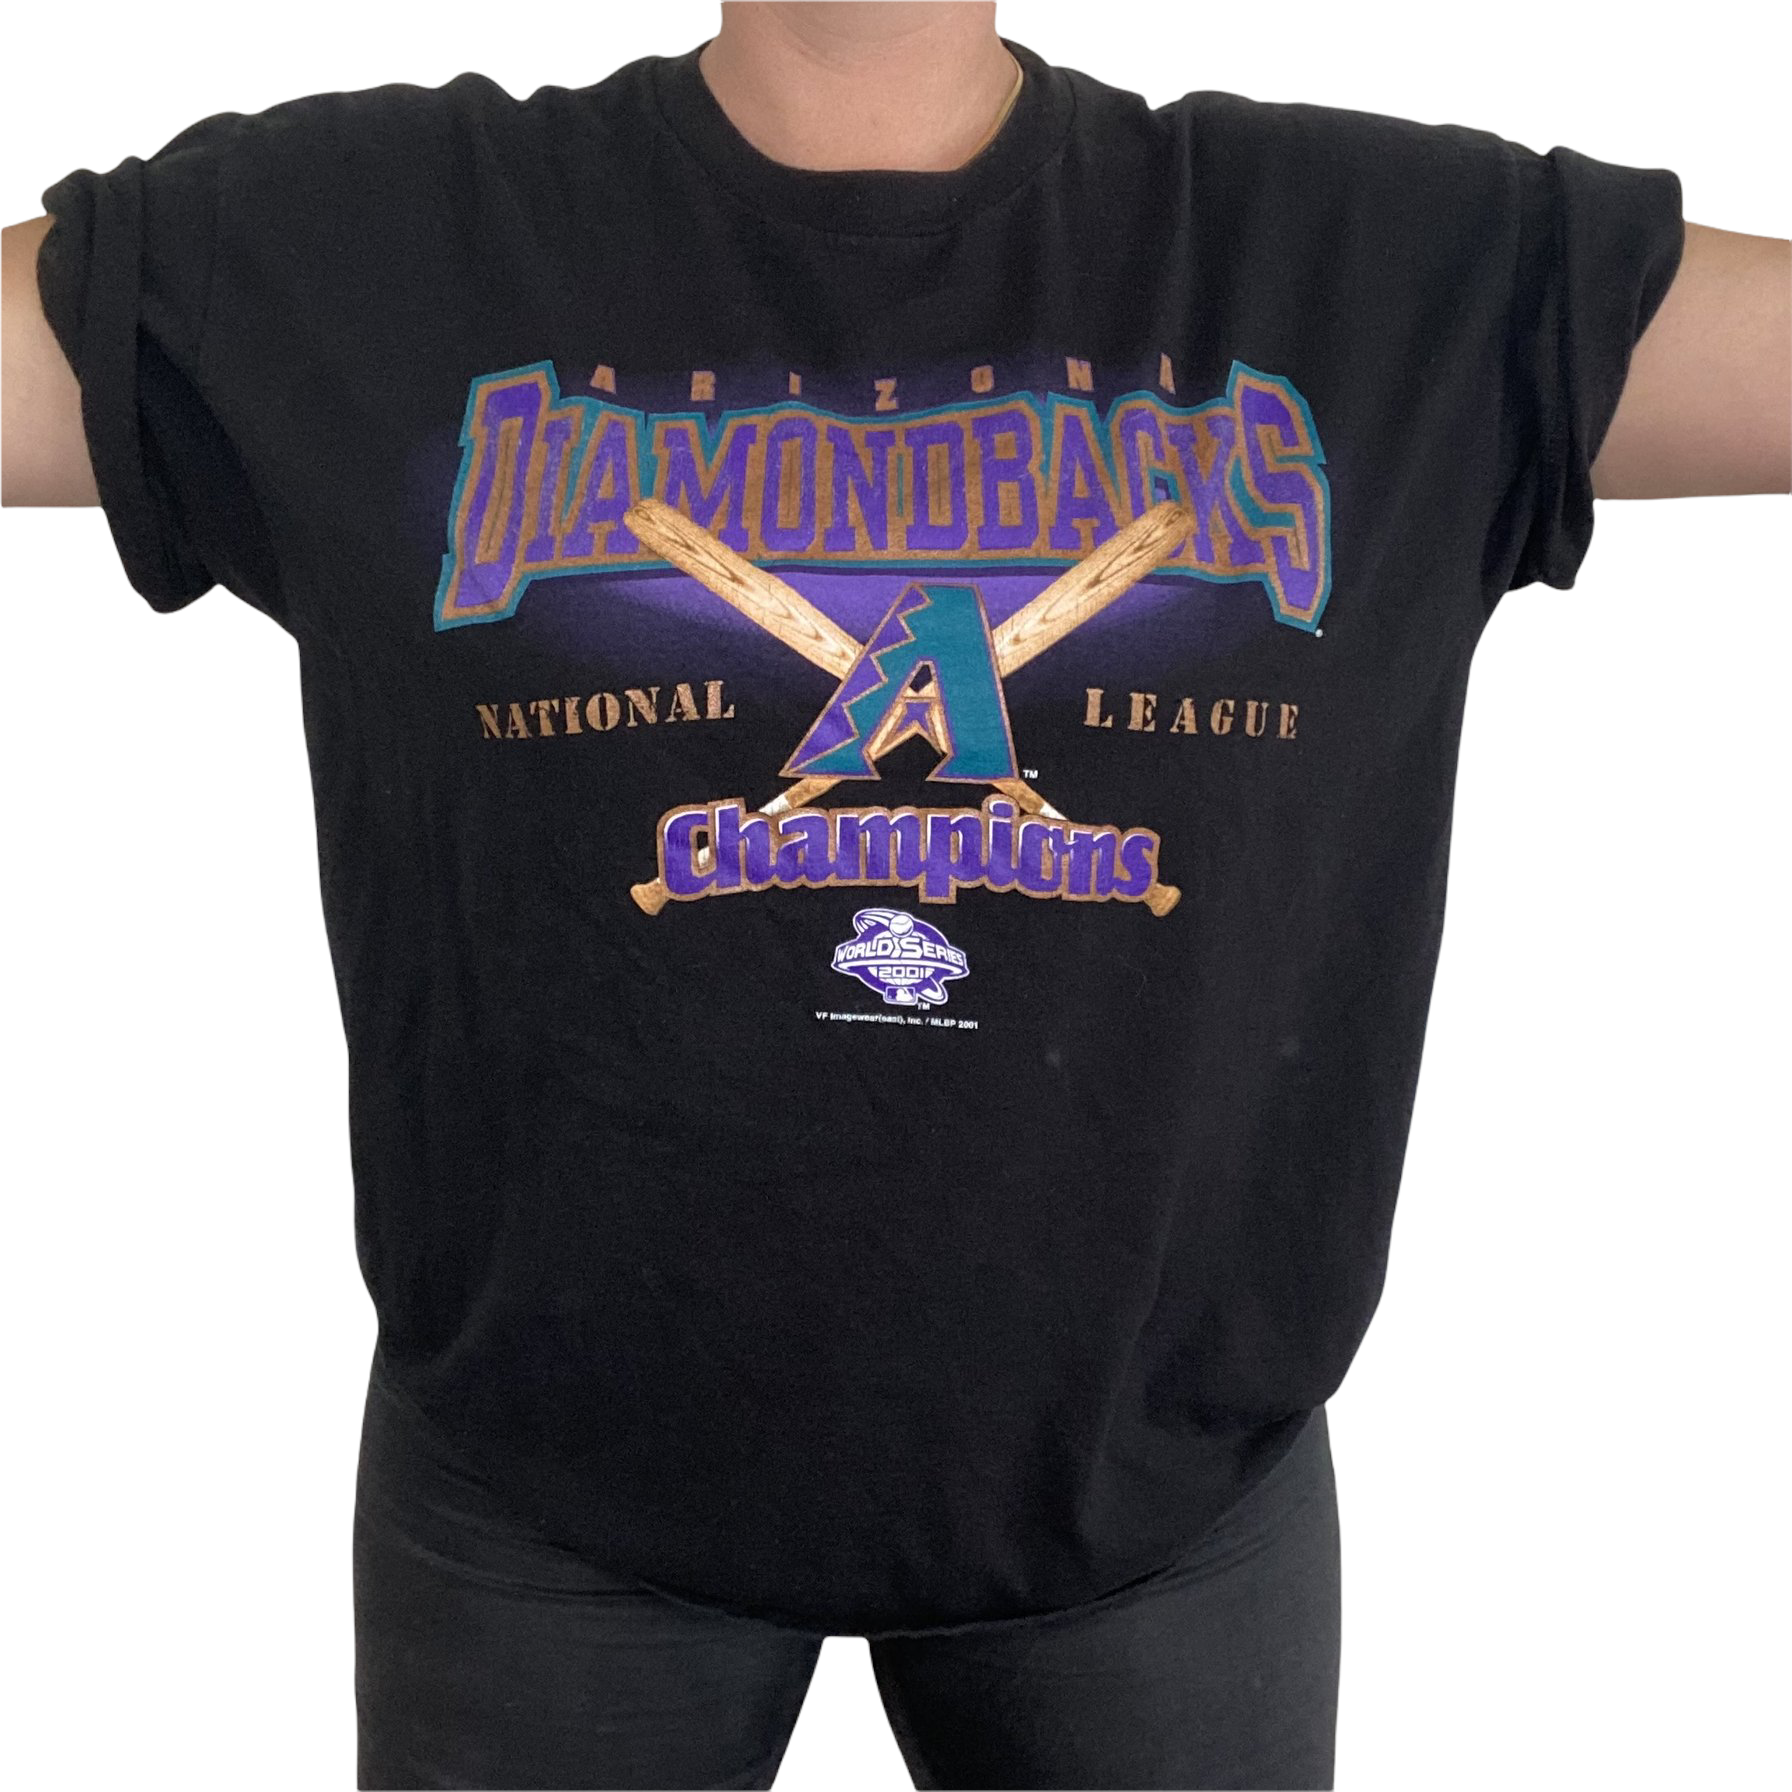 Vintage 90s Arizona Diamondbacks Mlb T-shirt / 1996 Logo 7 / 